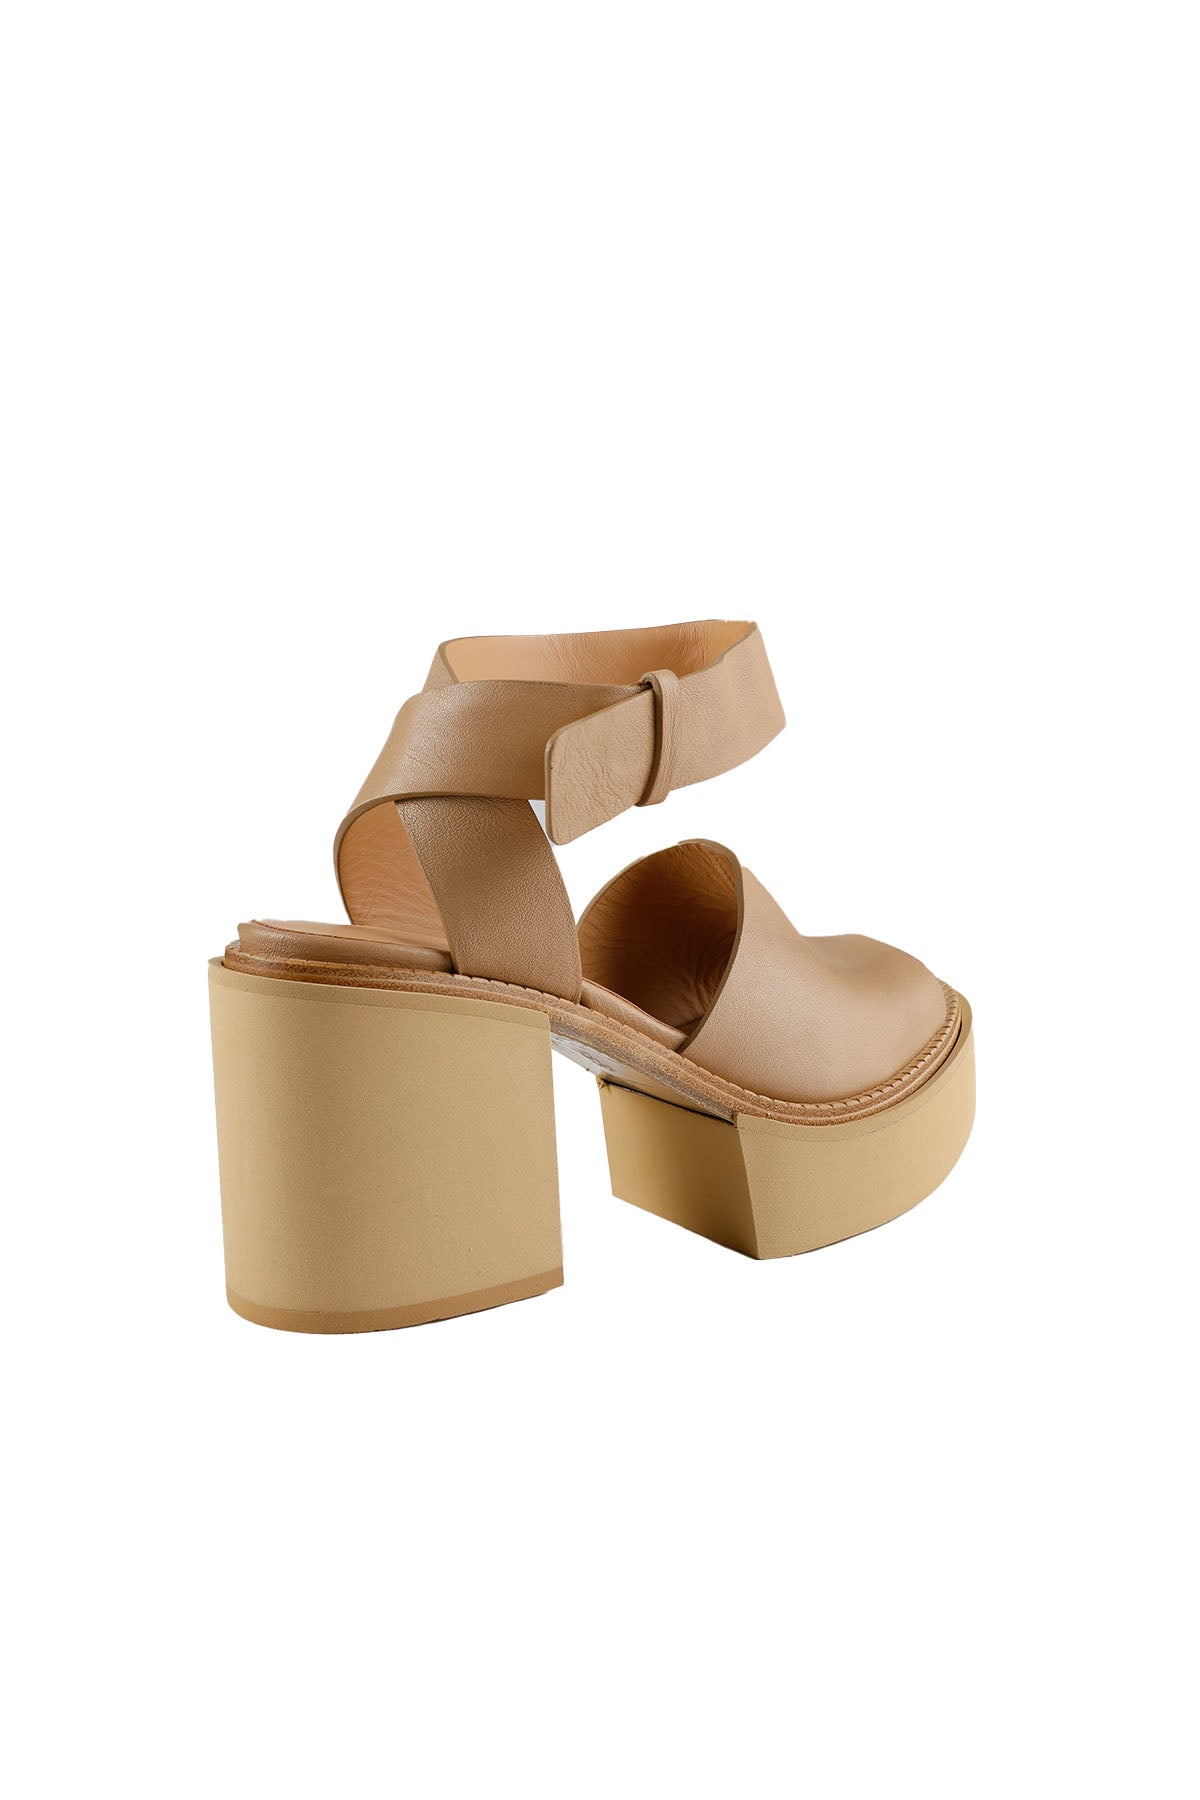 Paloma Barcelo Ayrık Platform Sandalet-Libas Trendy Fashion Store